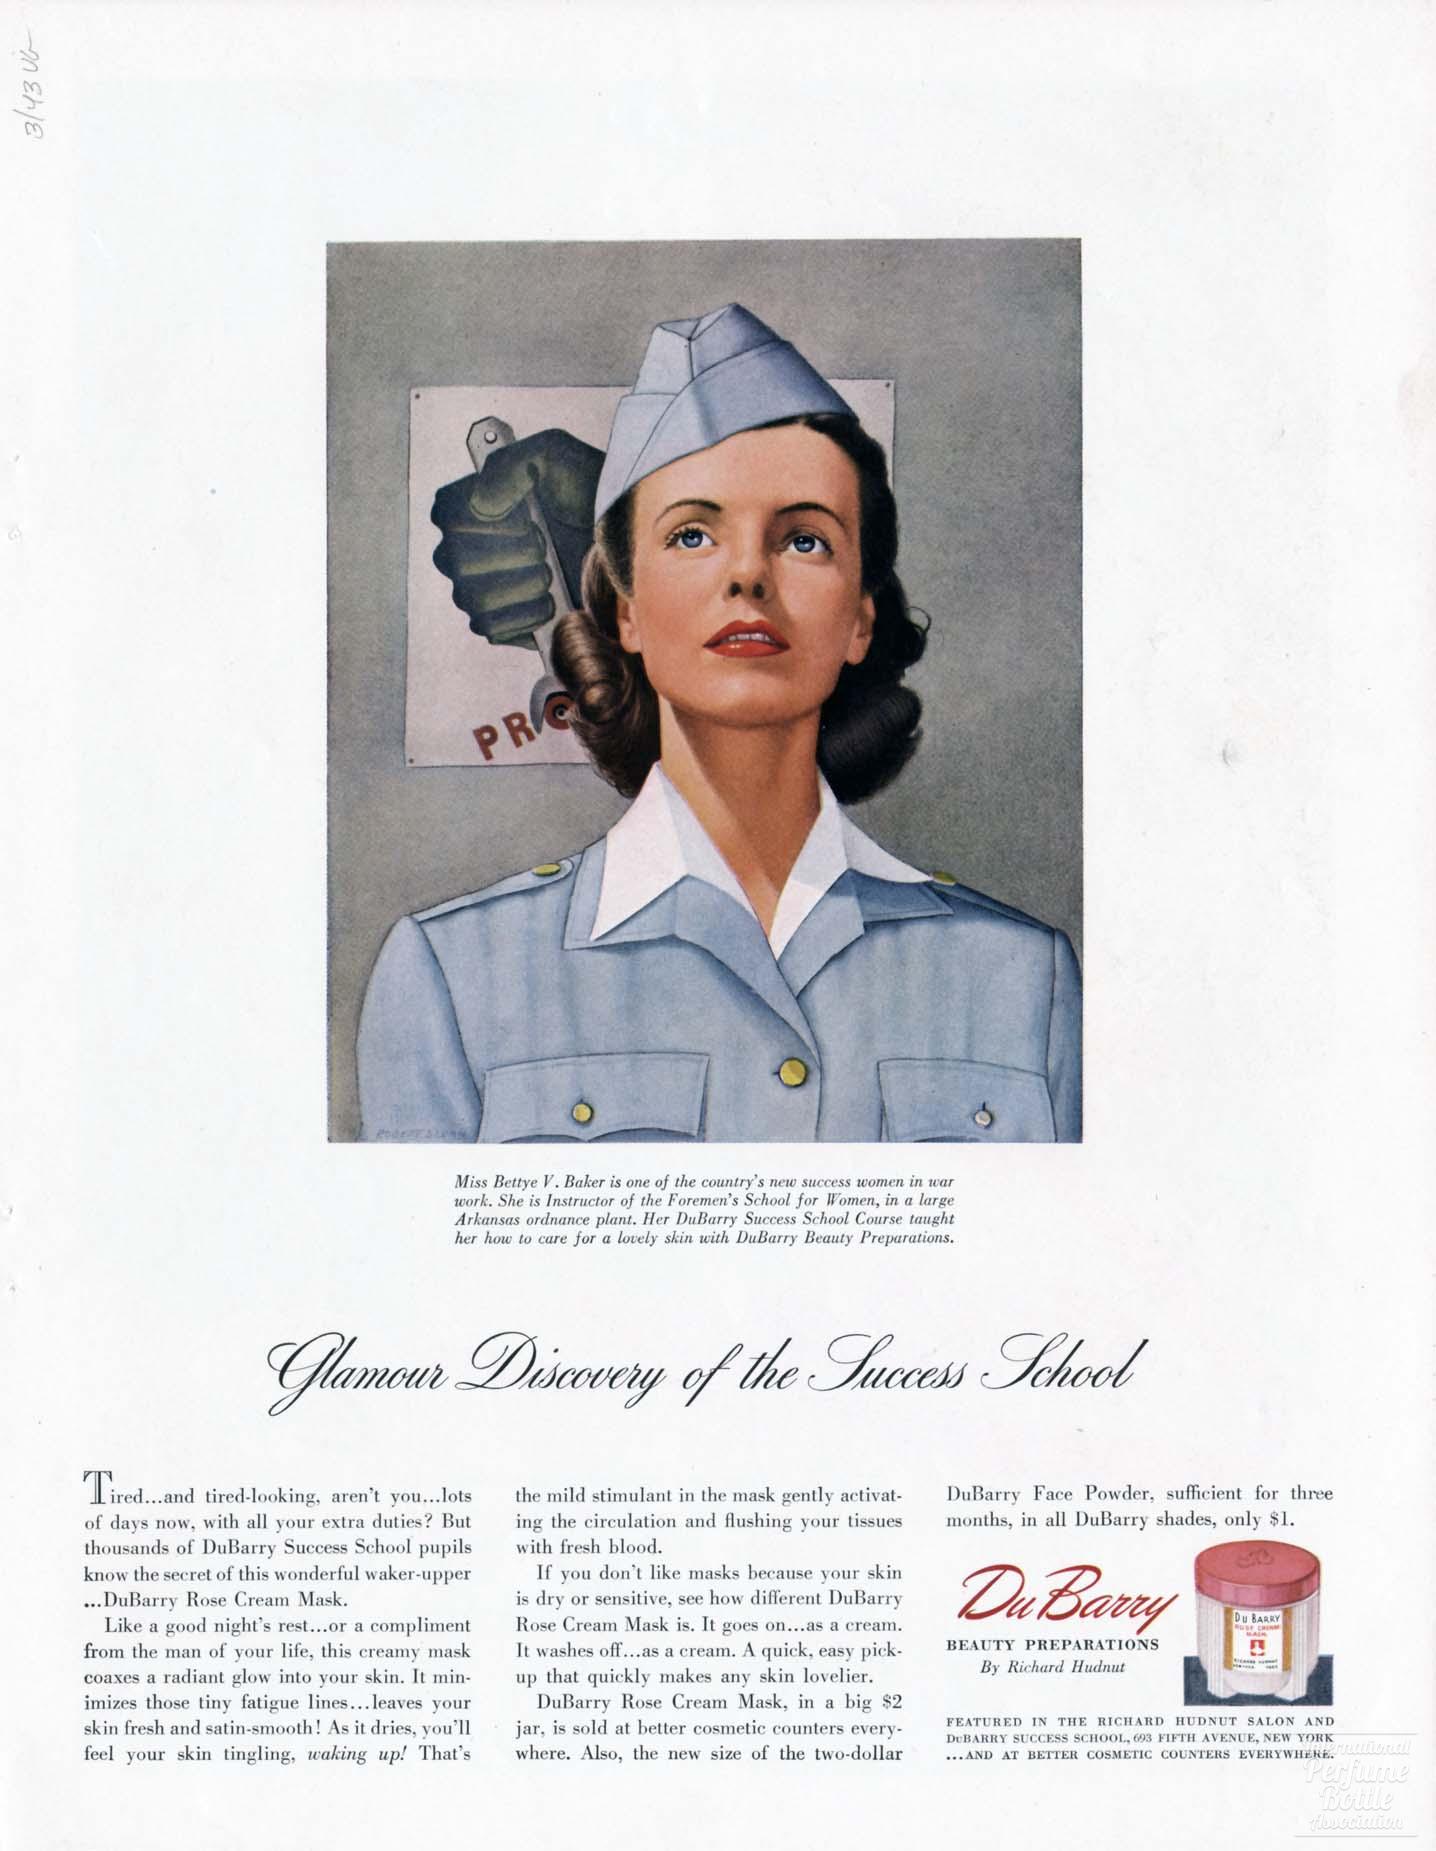 "DuBarry Beauty Preparations" by Richard Hudnut Advertisement - 1942